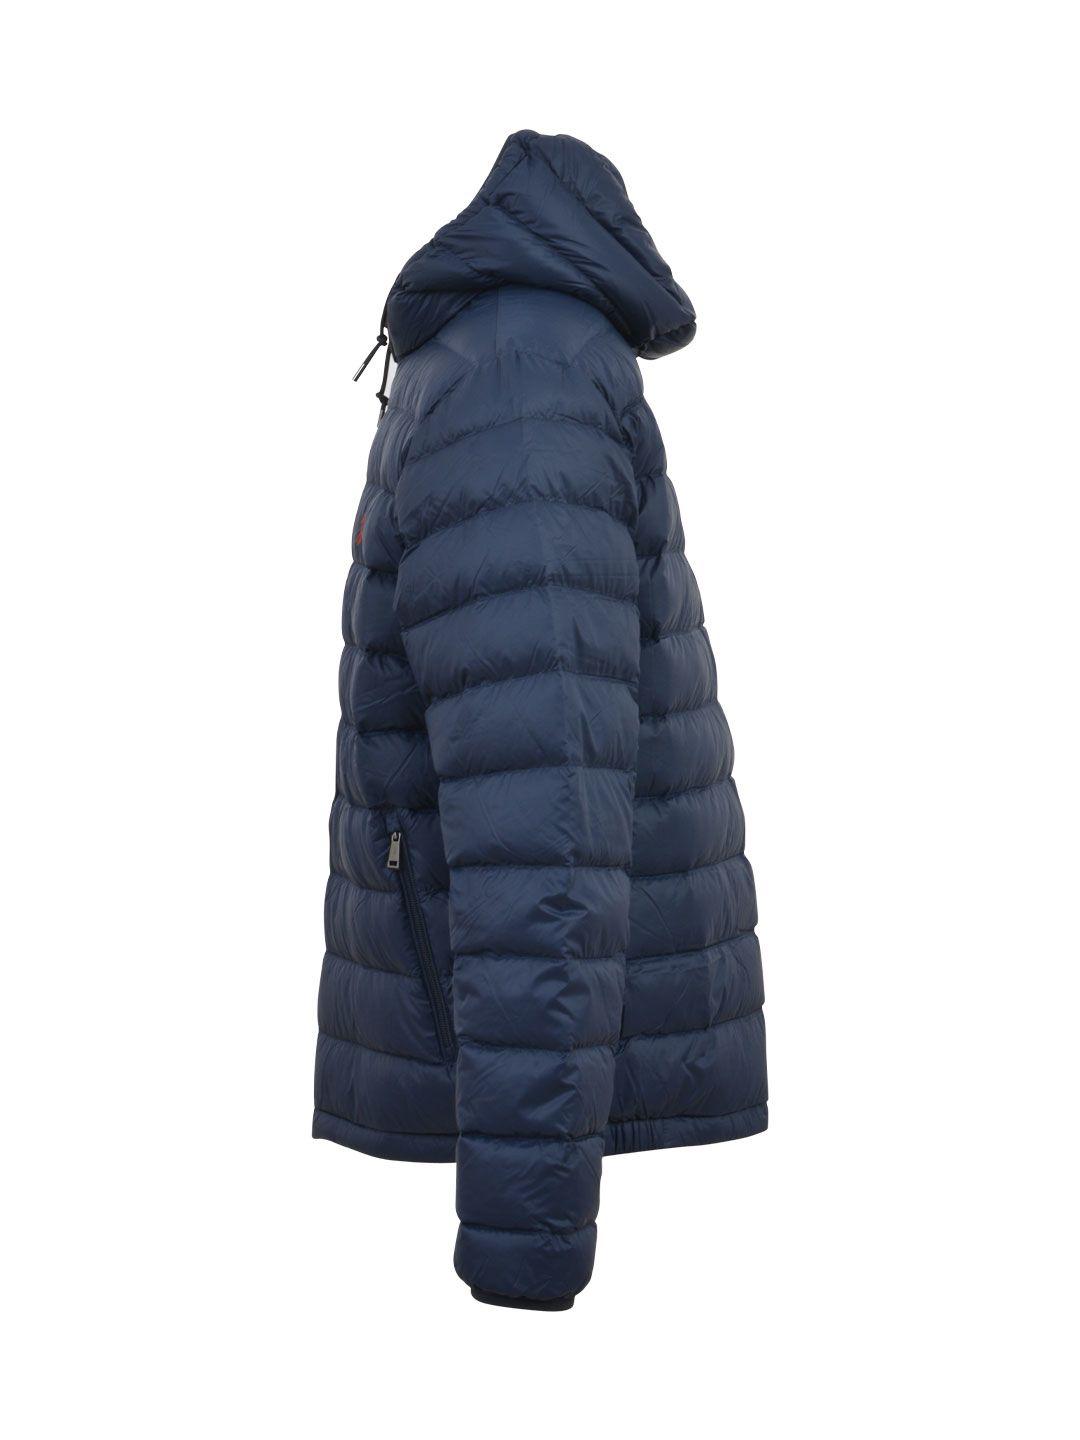 polo ralph lauren packable hooded down jacket